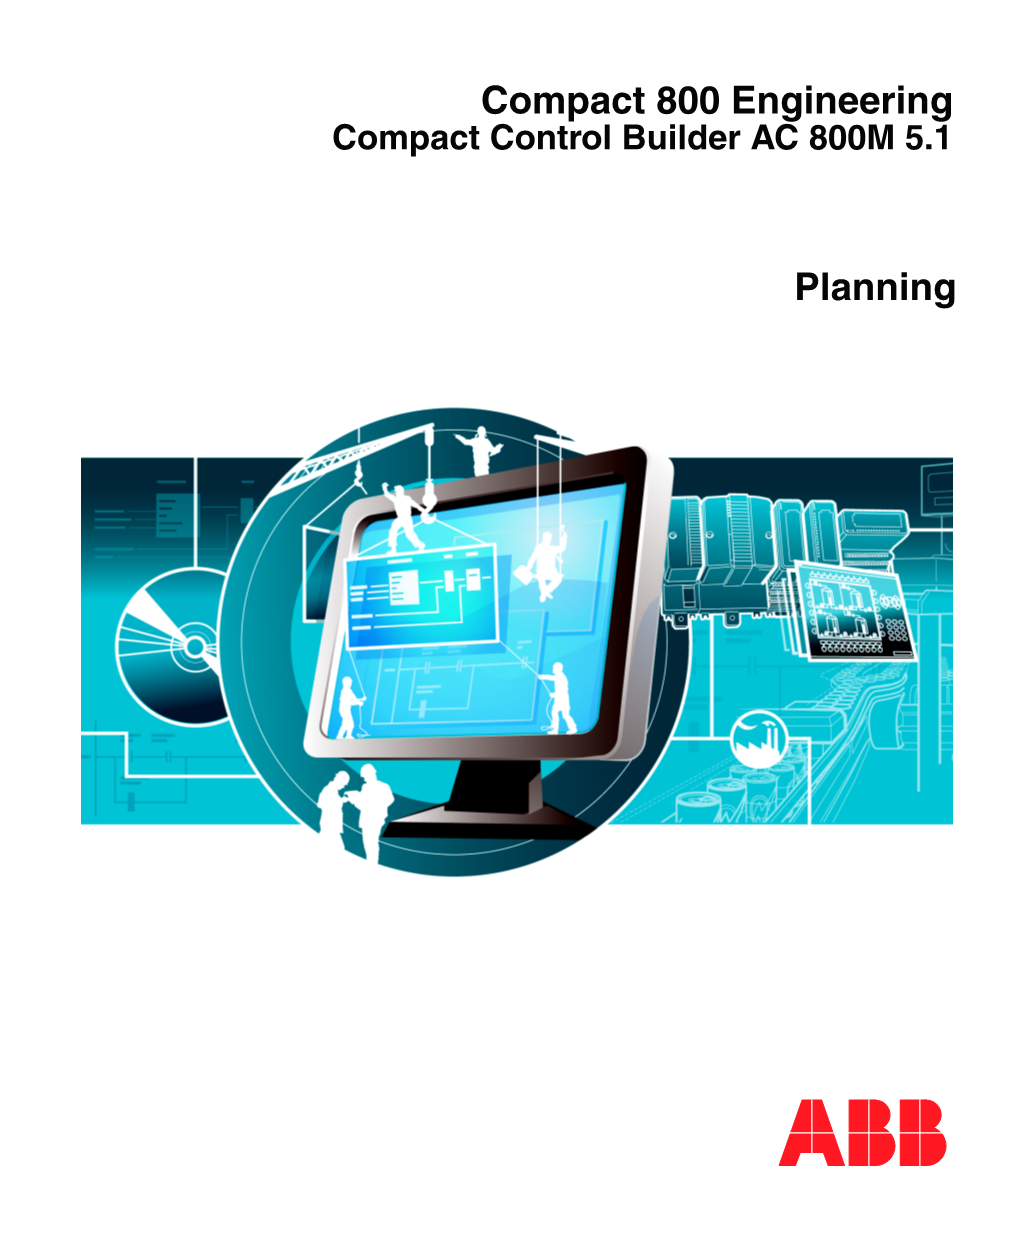 Compact Control Builder AC 800M 5.1